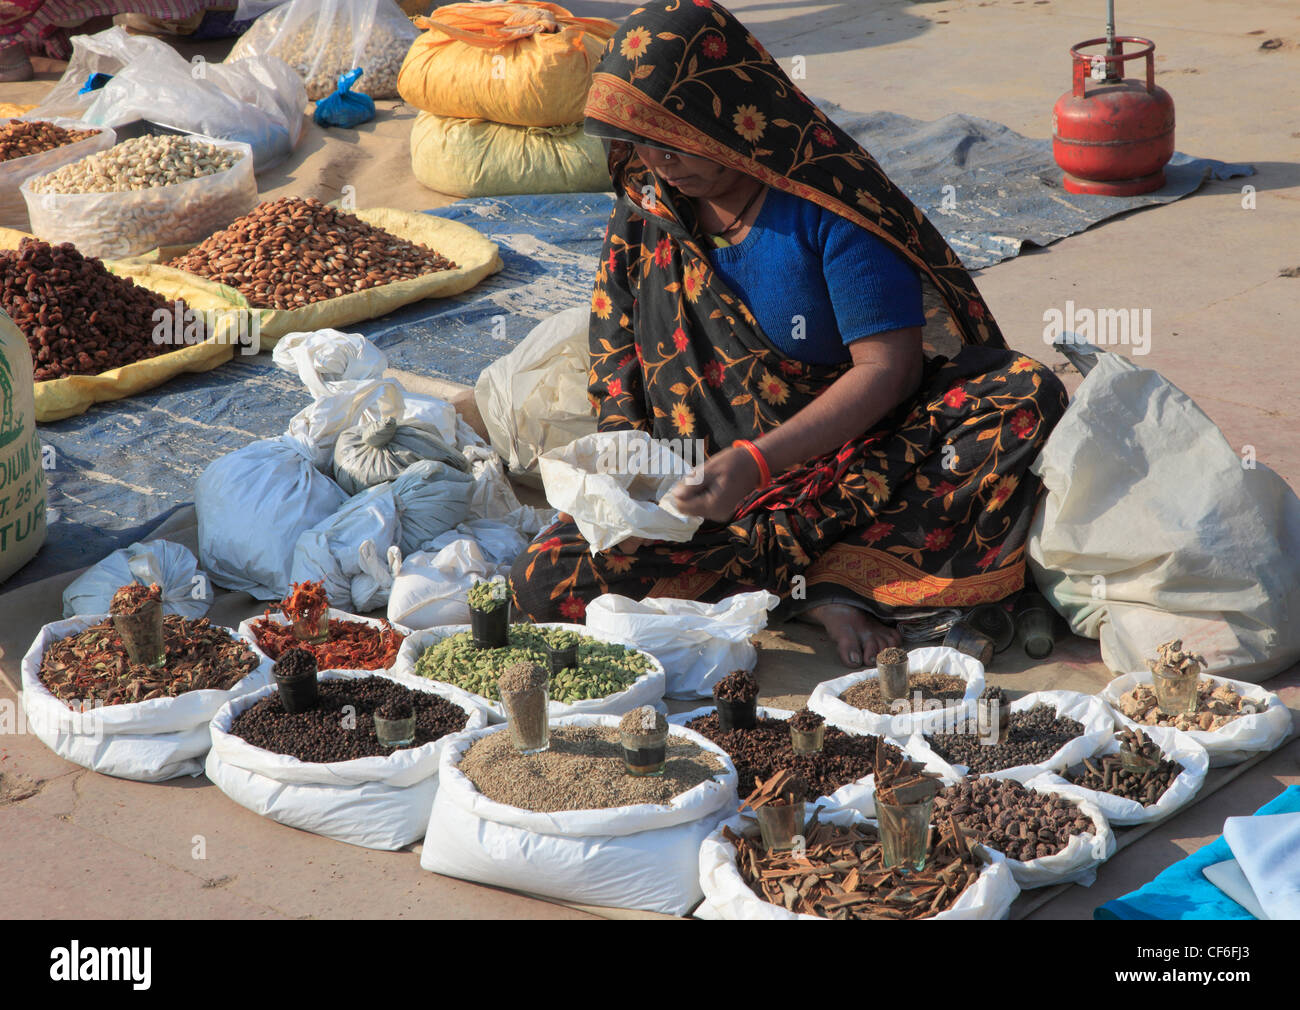 India, Delhi, Old Delhi, street market, spice vendor, Stock Photo